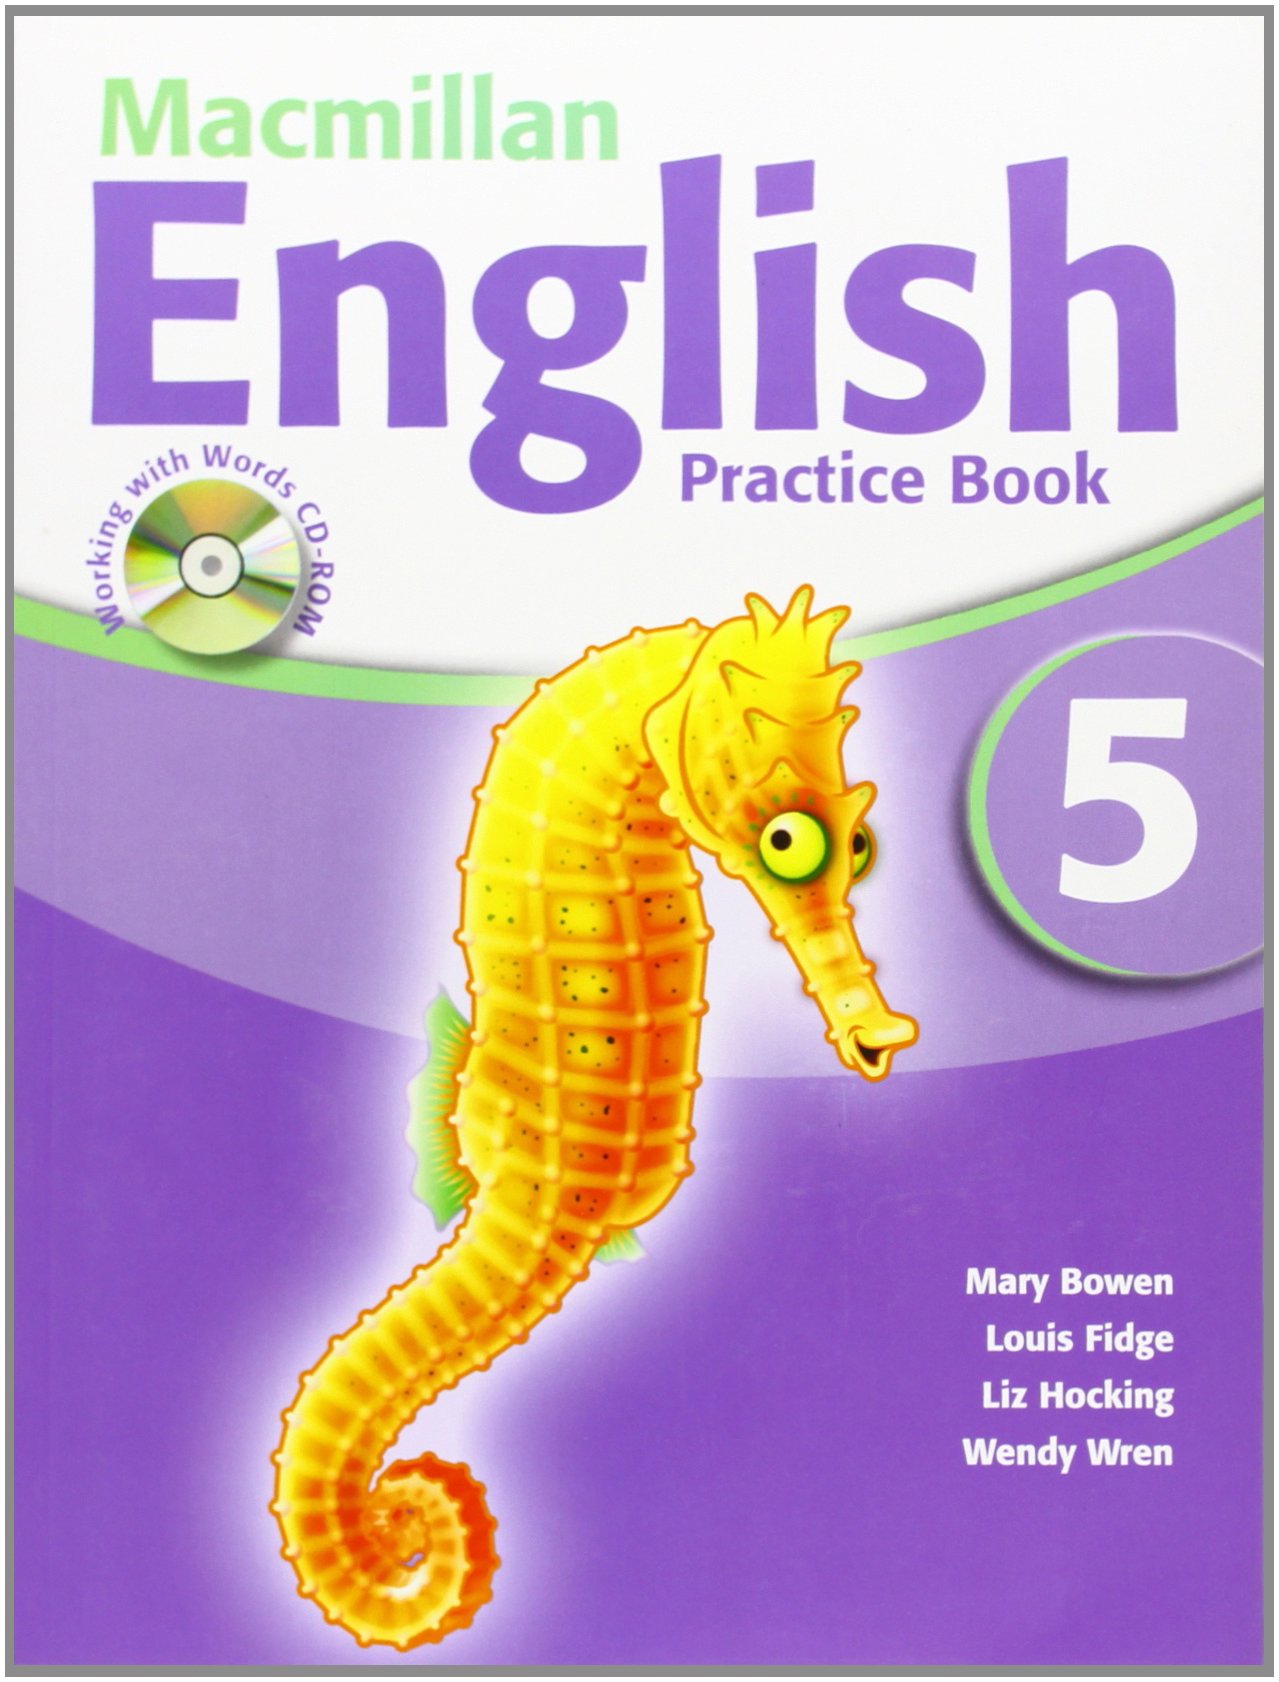 Macmillan English - Practice Book and CD-ROM Pack - Level 5 | Mary Bowen, Liz Hocking, Wendy Wren